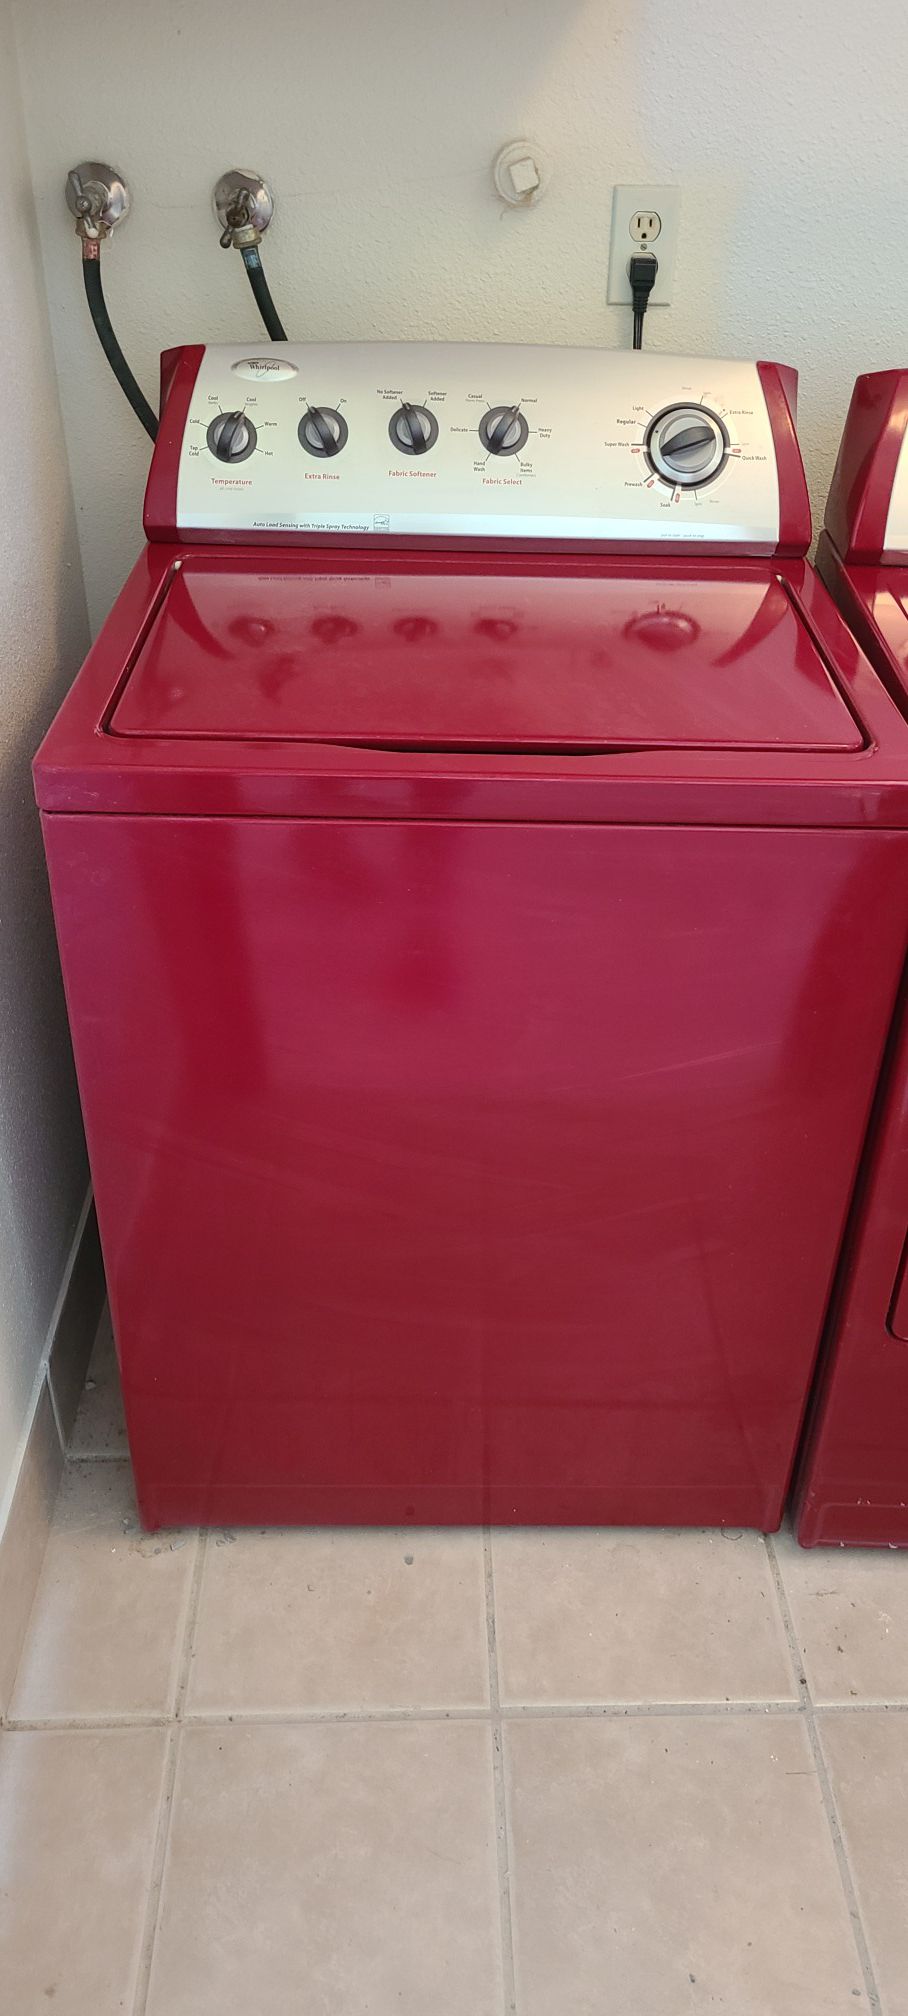 Whirlpool washer dryer